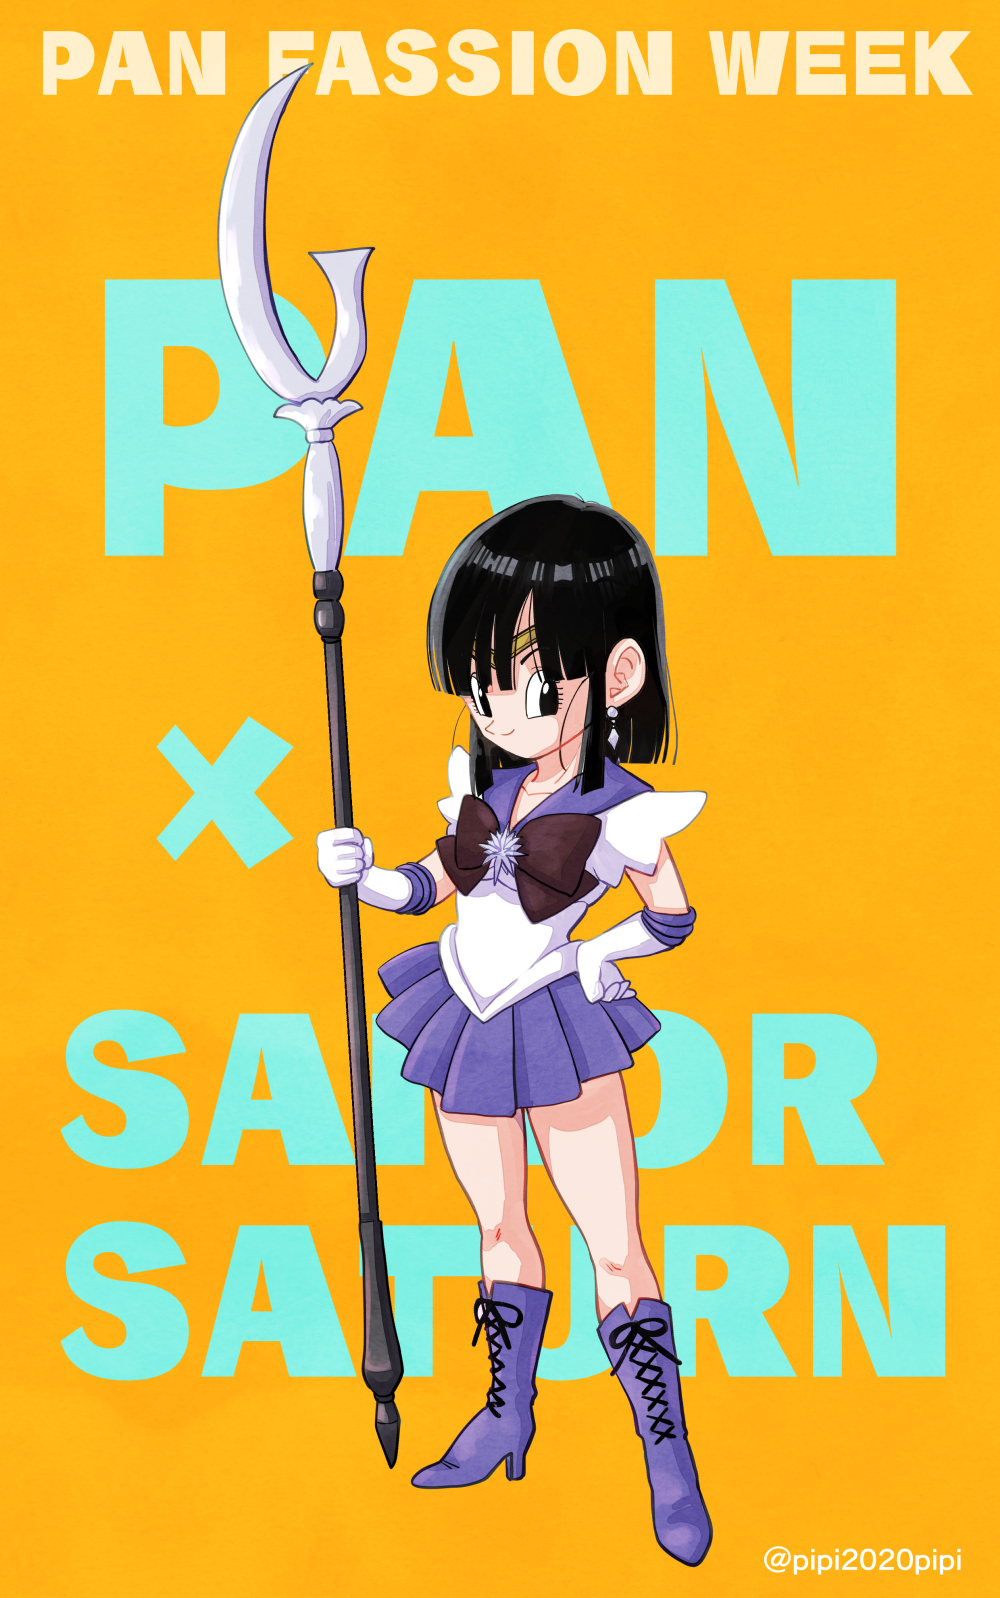 Pipi2020pipi Pan Dragon Ball Sailor Saturn Bishoujo Senshi Sailor